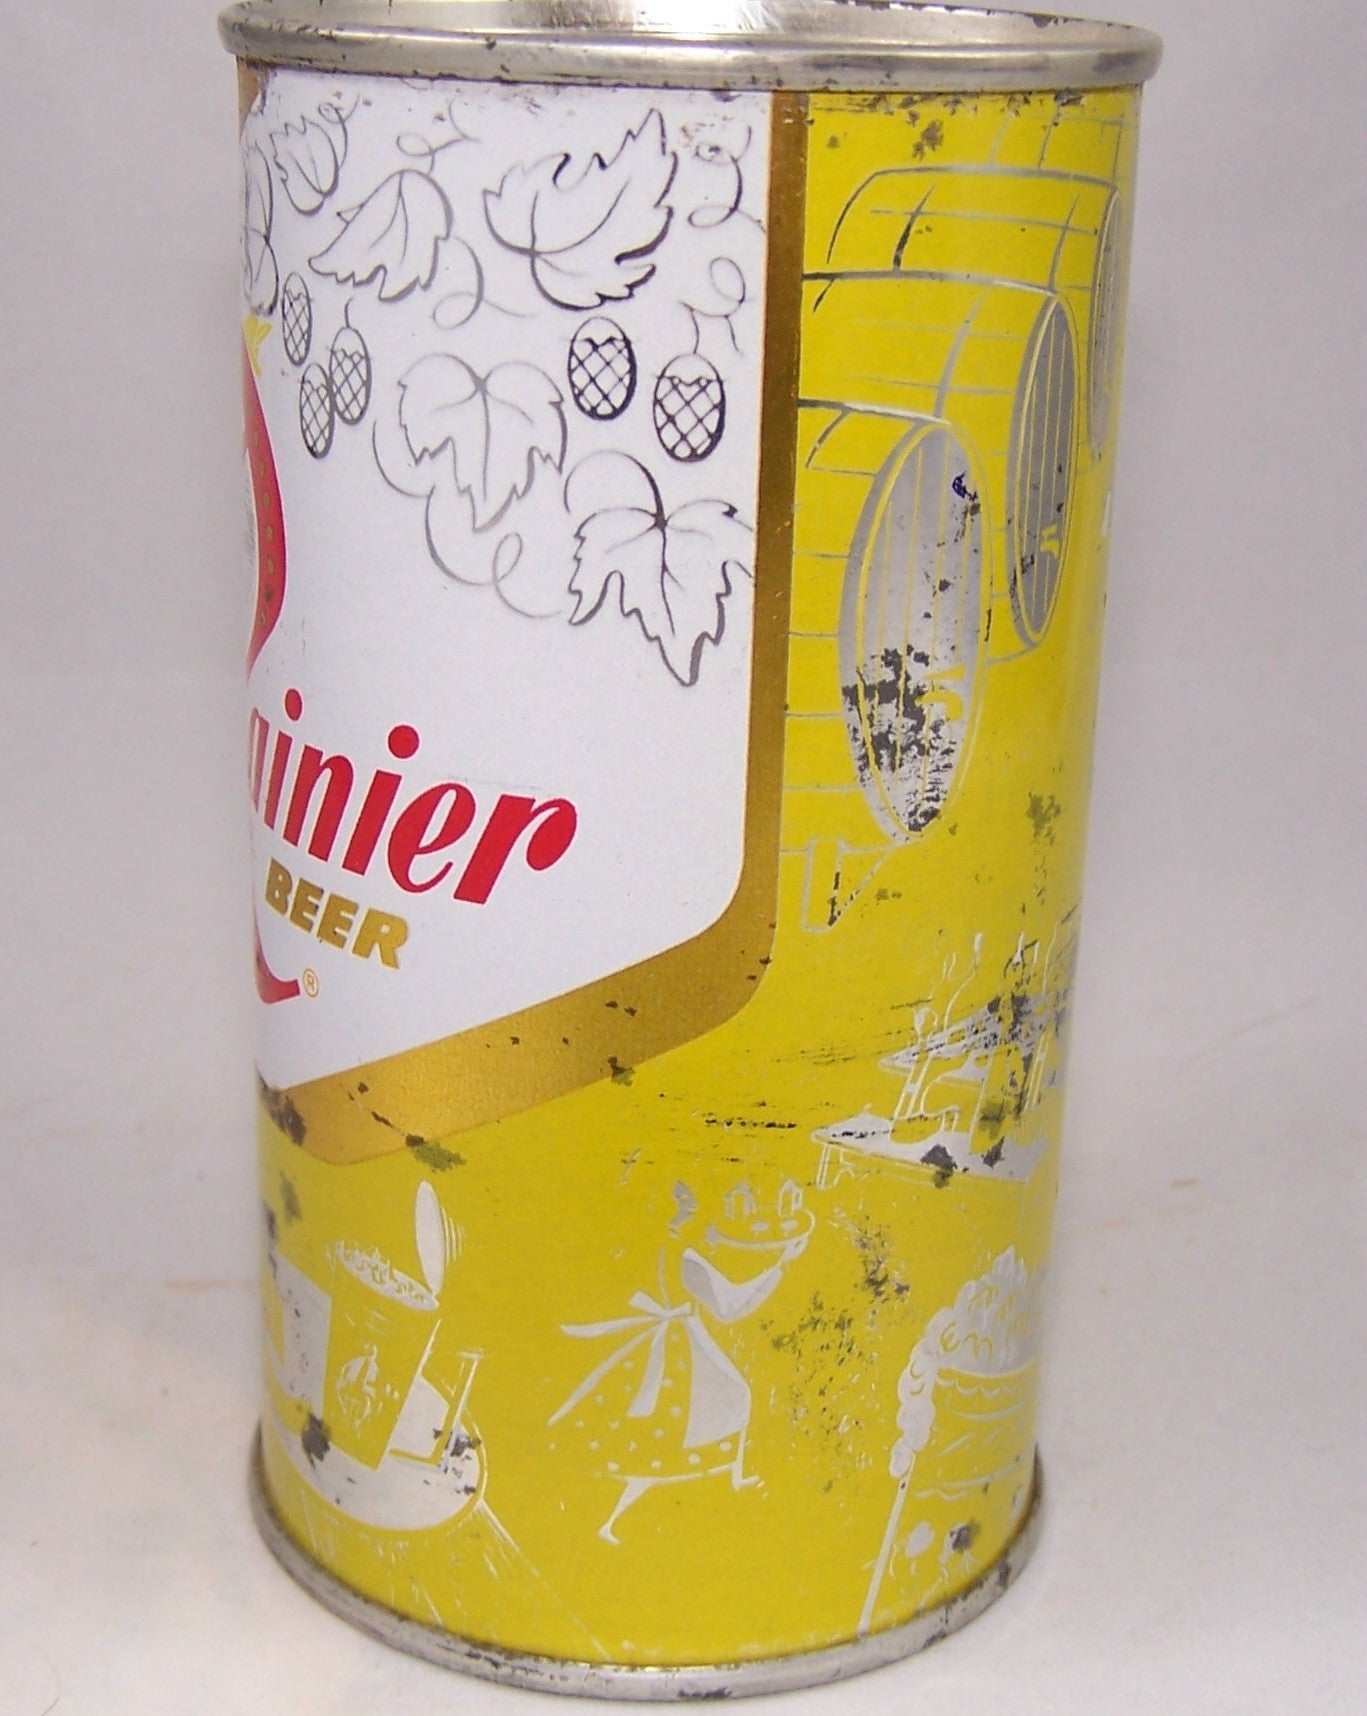 Rainier Truly Mild Beer, USBC 118-30, Grade 1- Sold on 05/10/16